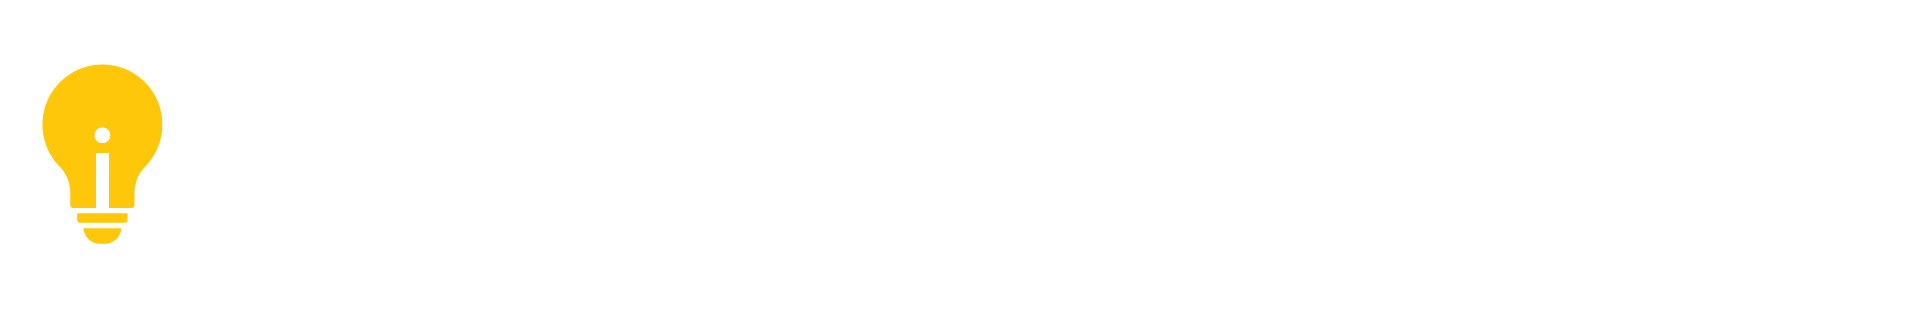 Insurance Summit Homepage